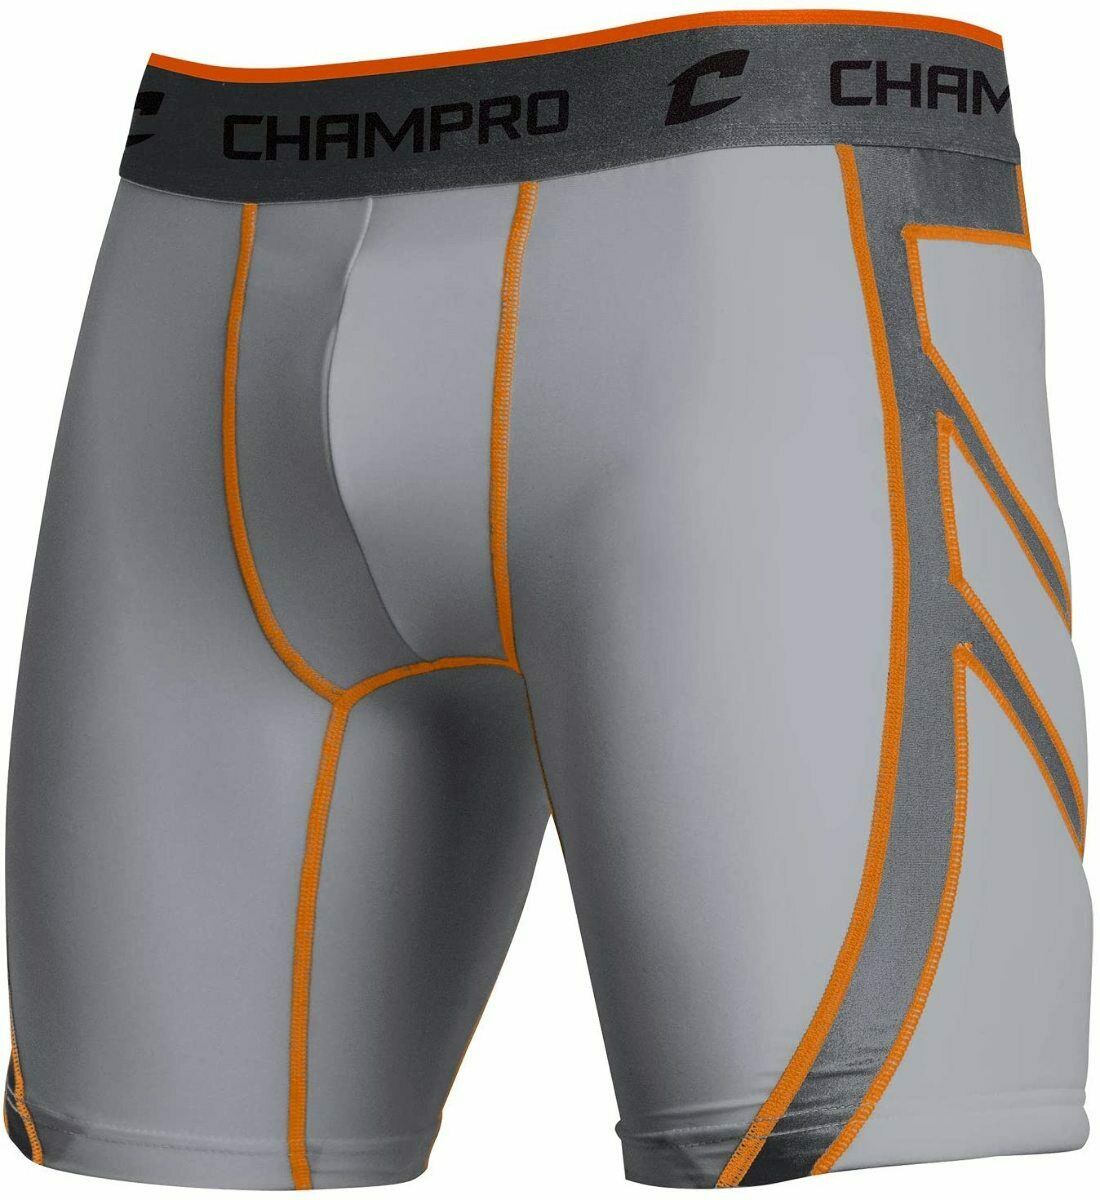 Champro Sports Youth Wind-up Baseball Compression Sliding Shorts, Grey